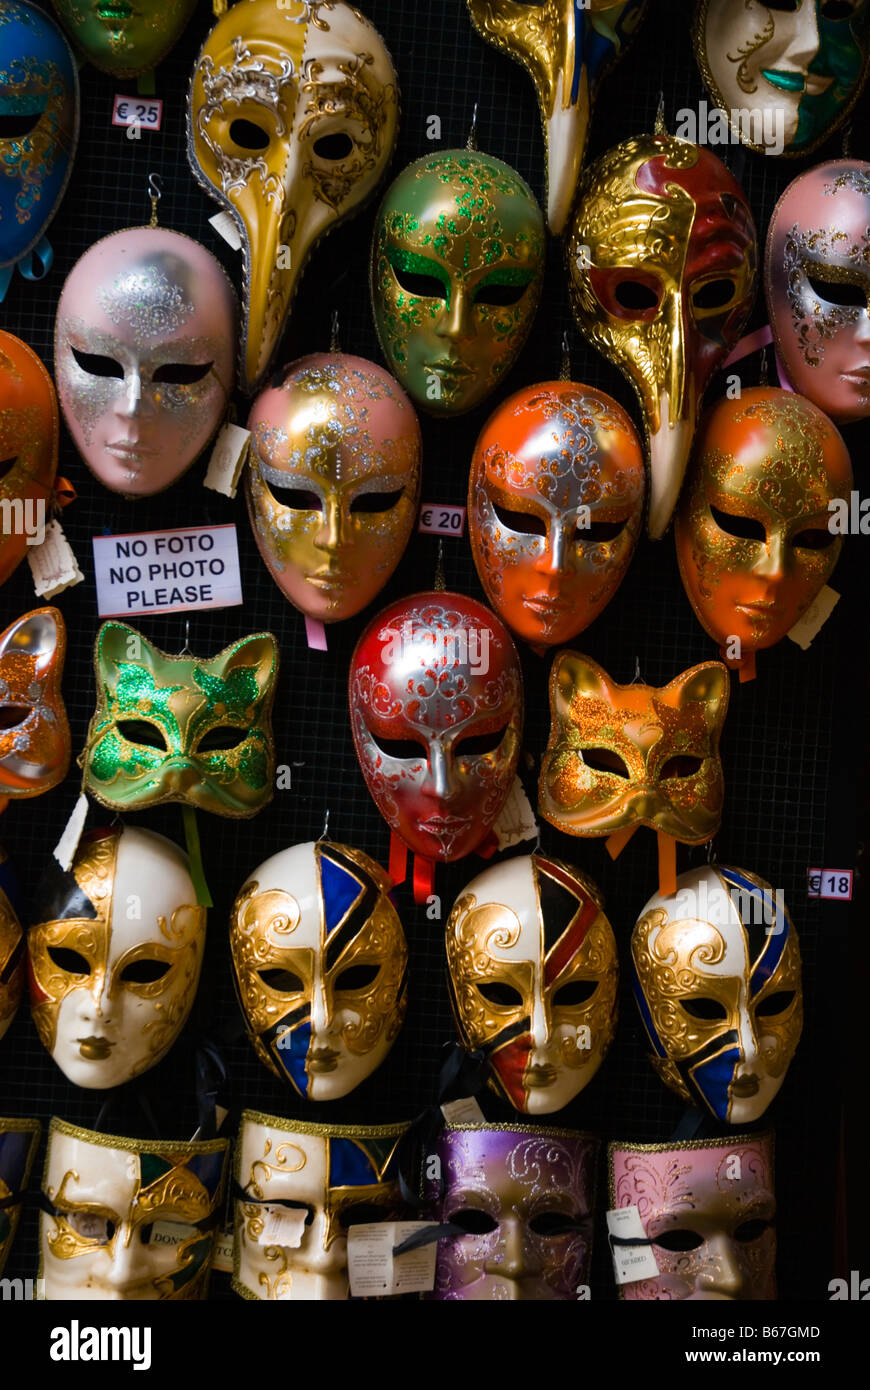 Carnevale masks at Rialto market in Venice Italy Europe Stock Photo